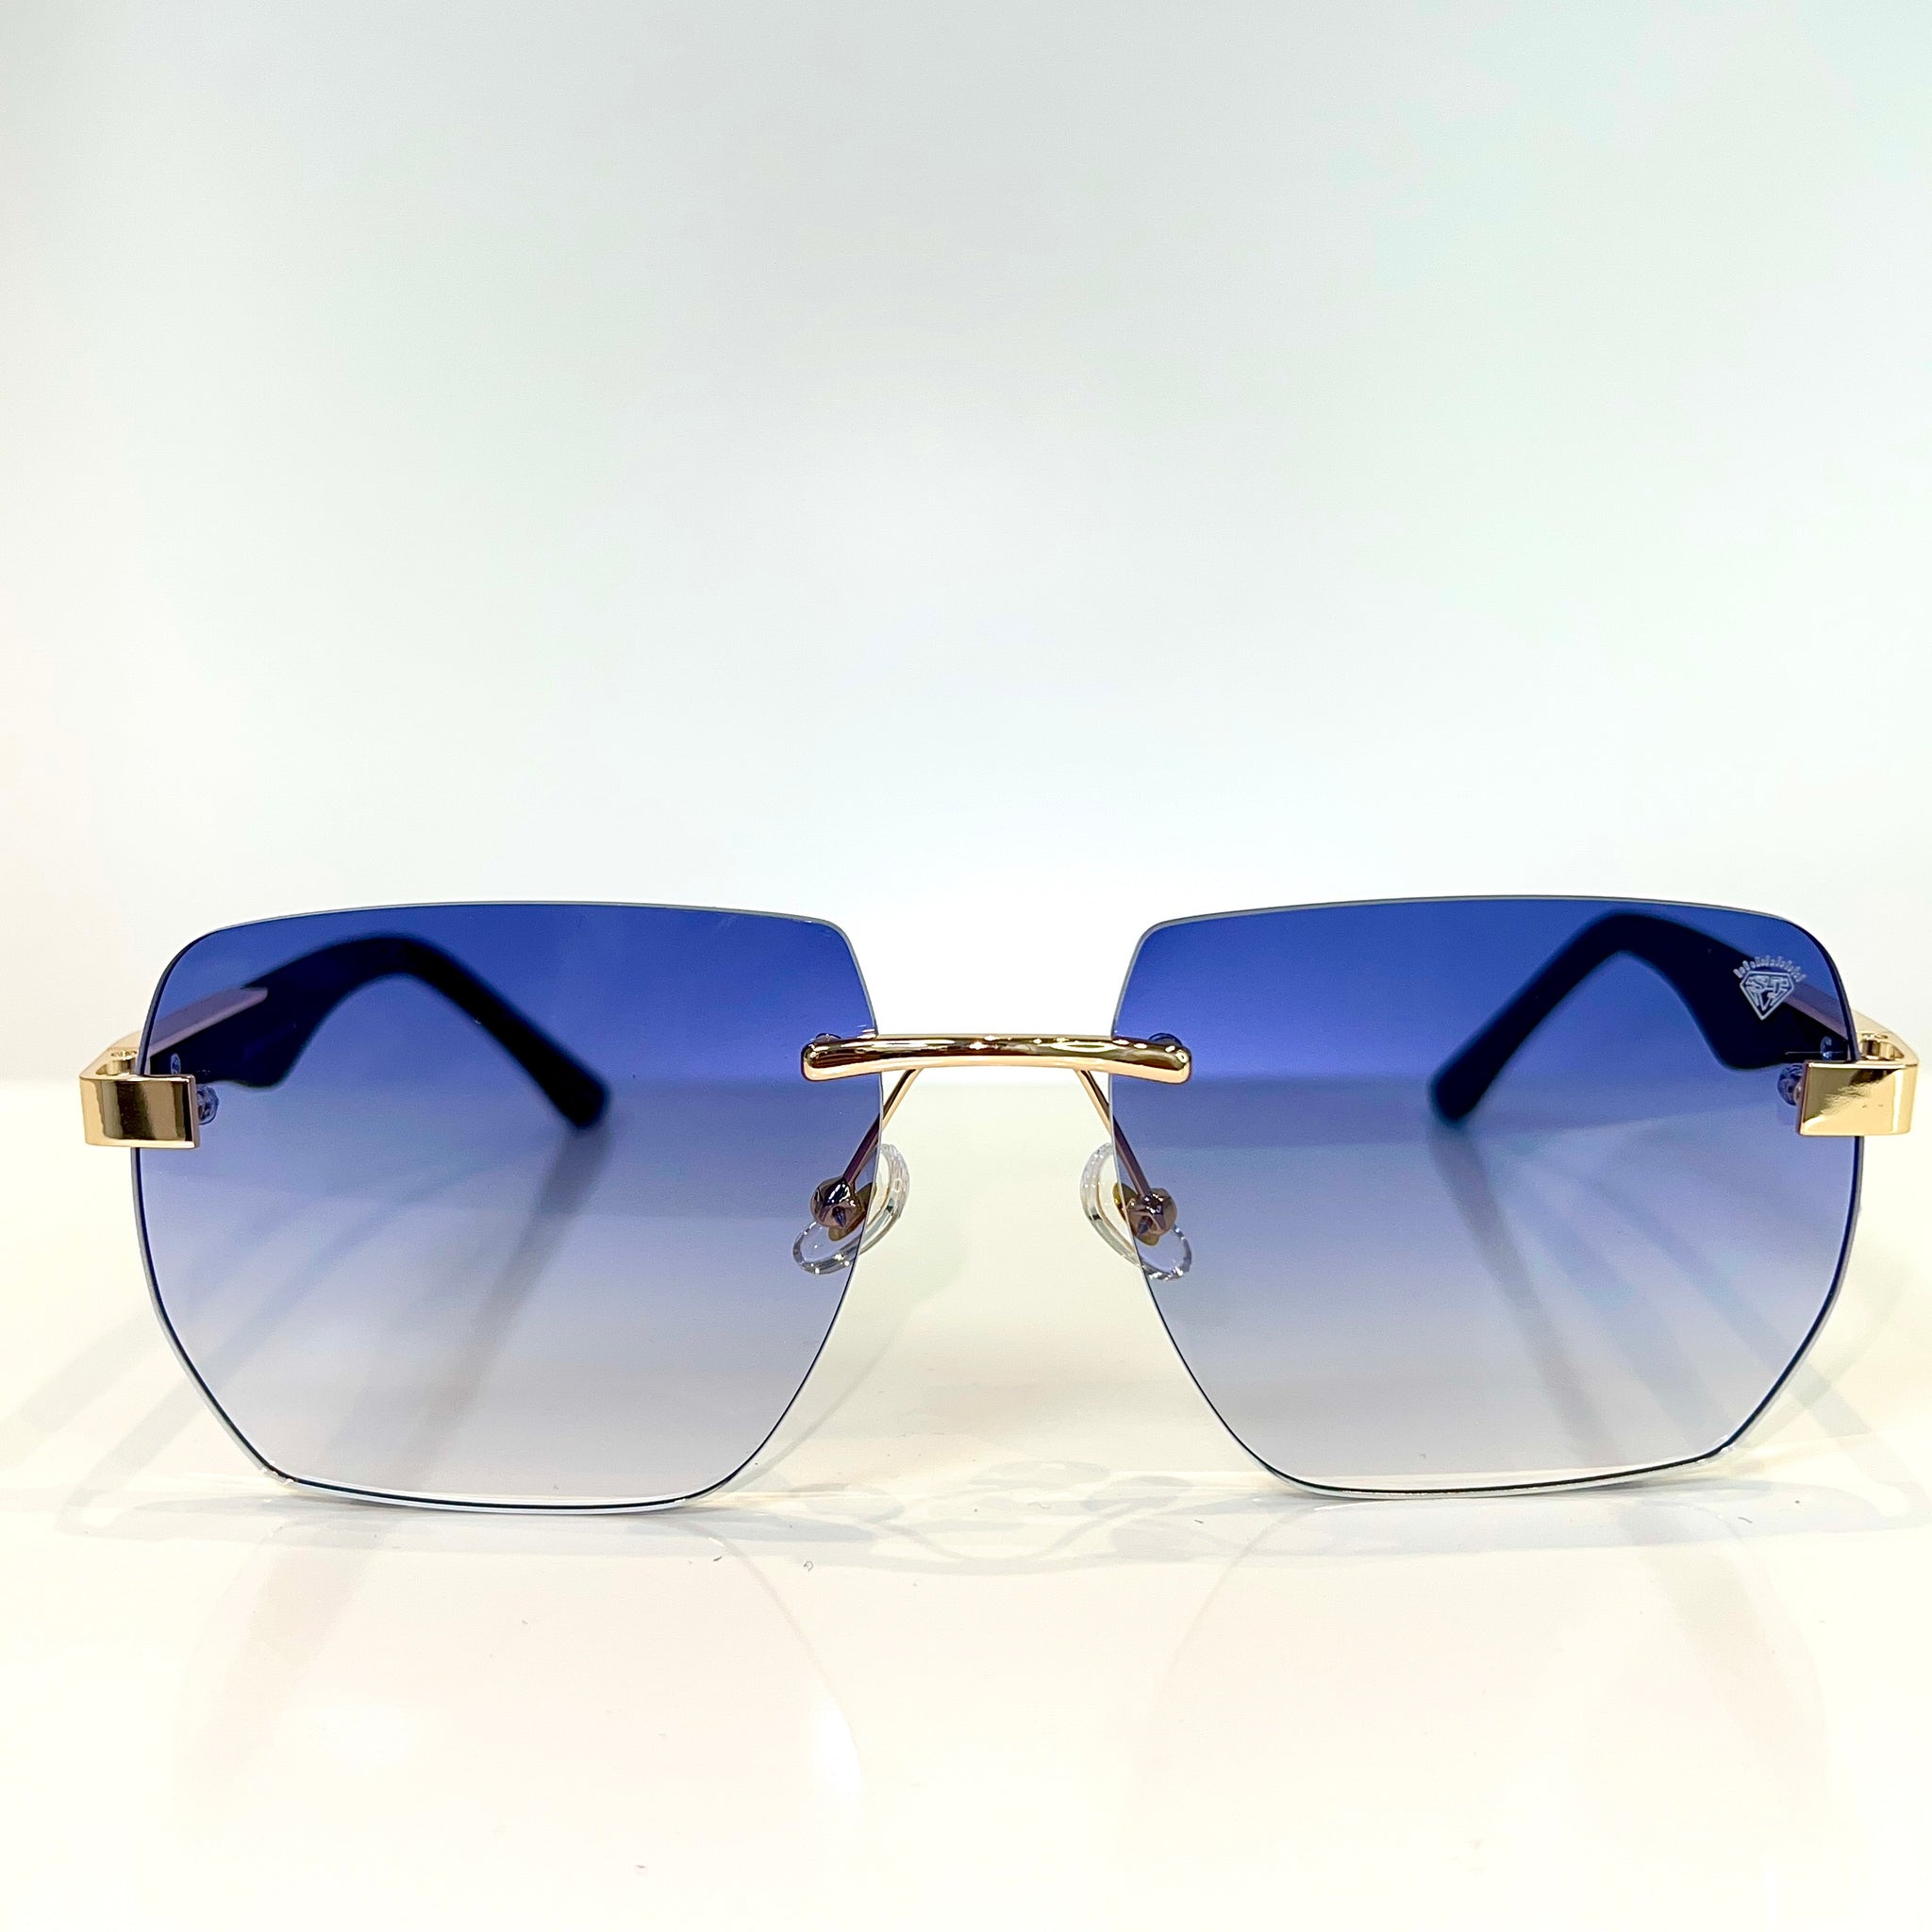 Dubai Glasses - 14 carat gold plated - Blue shade